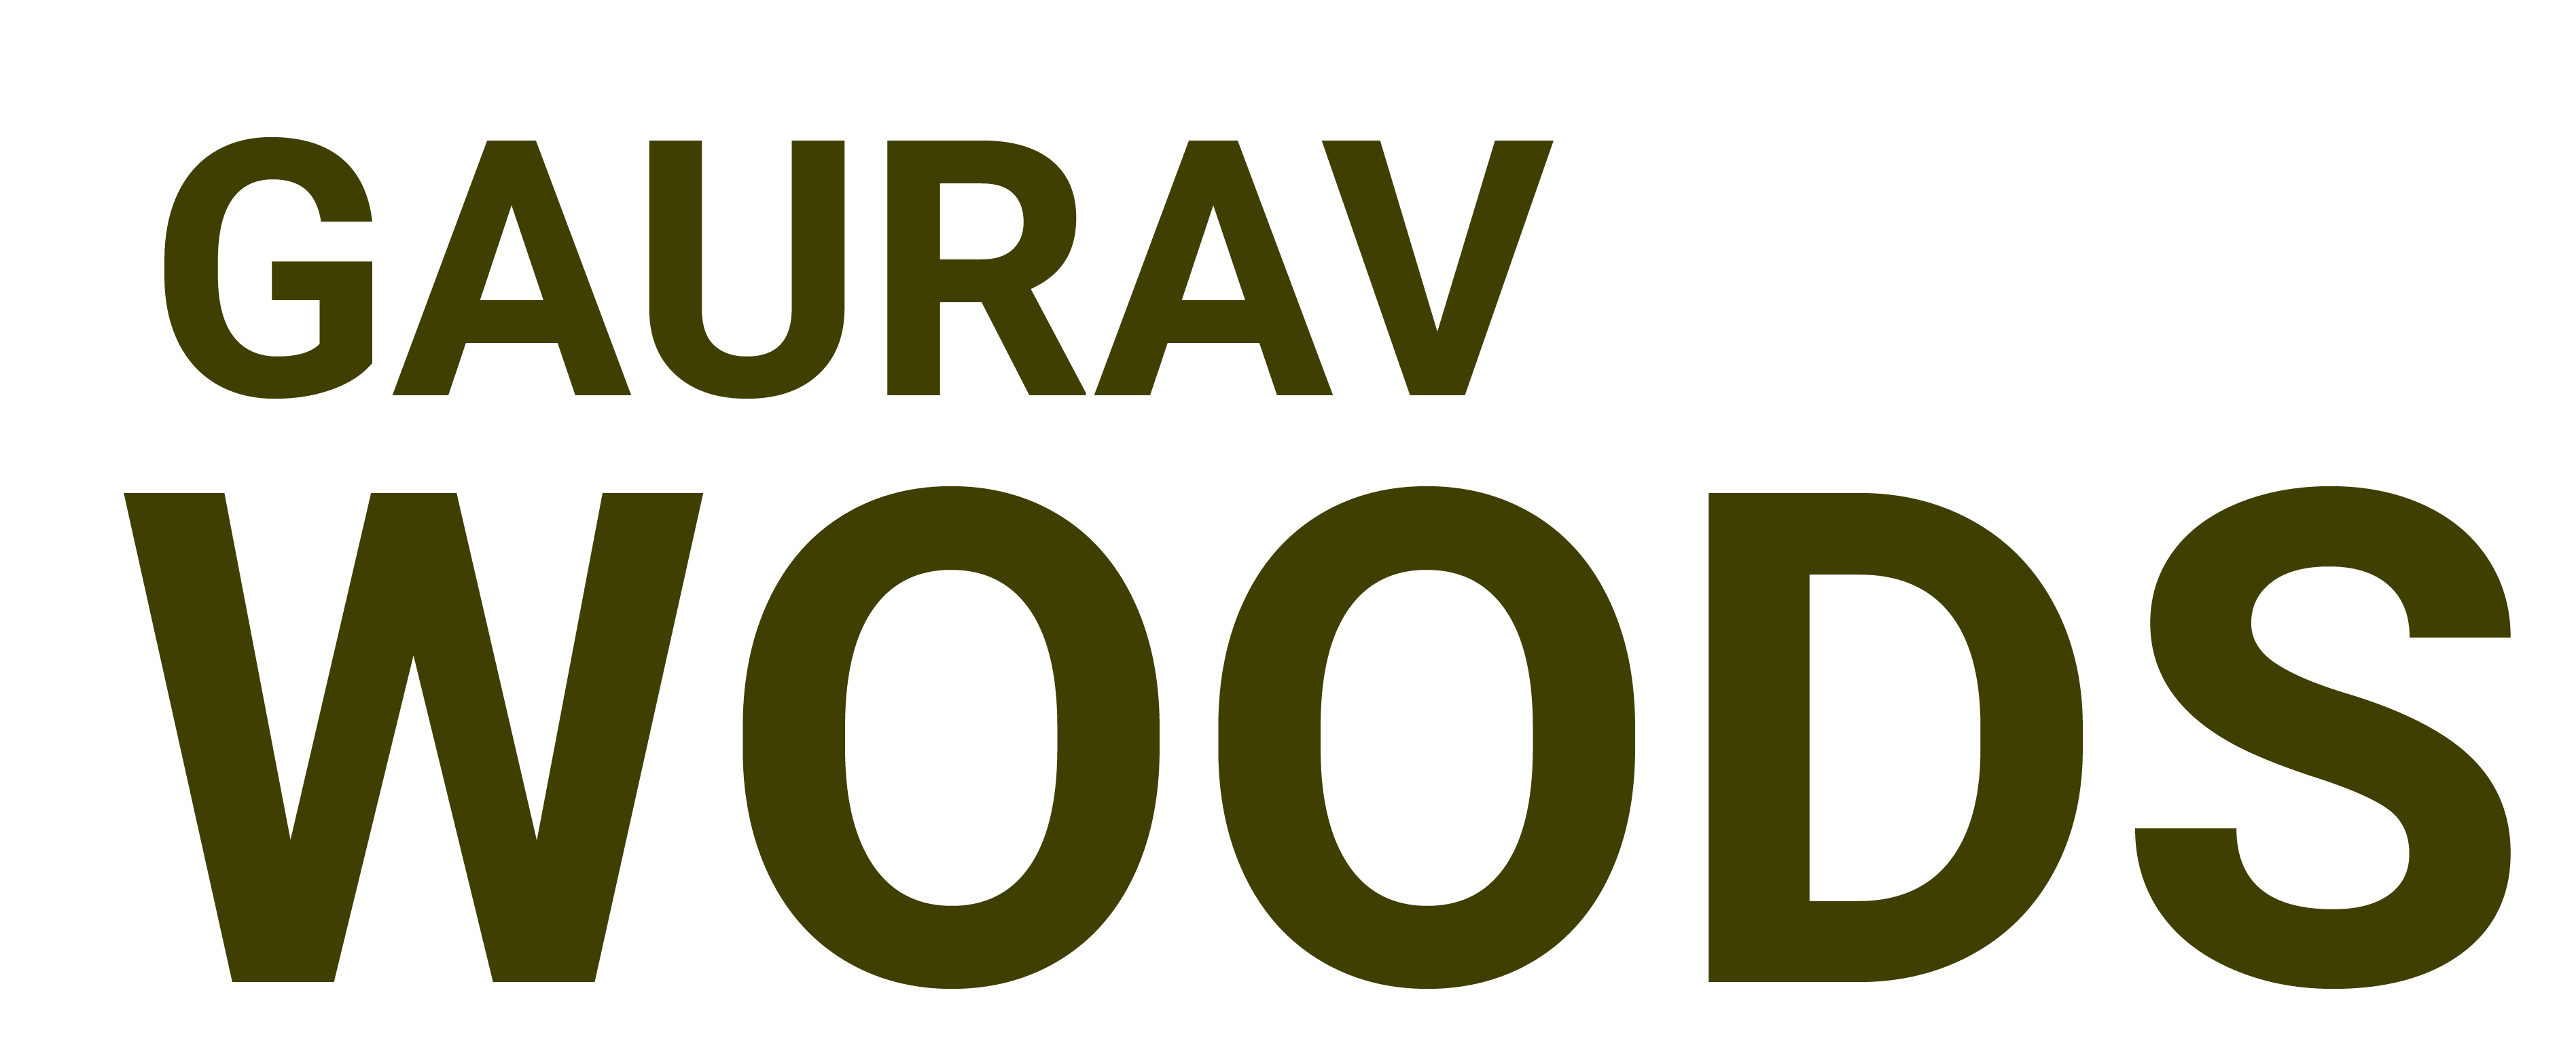 Gaurav Woods logo